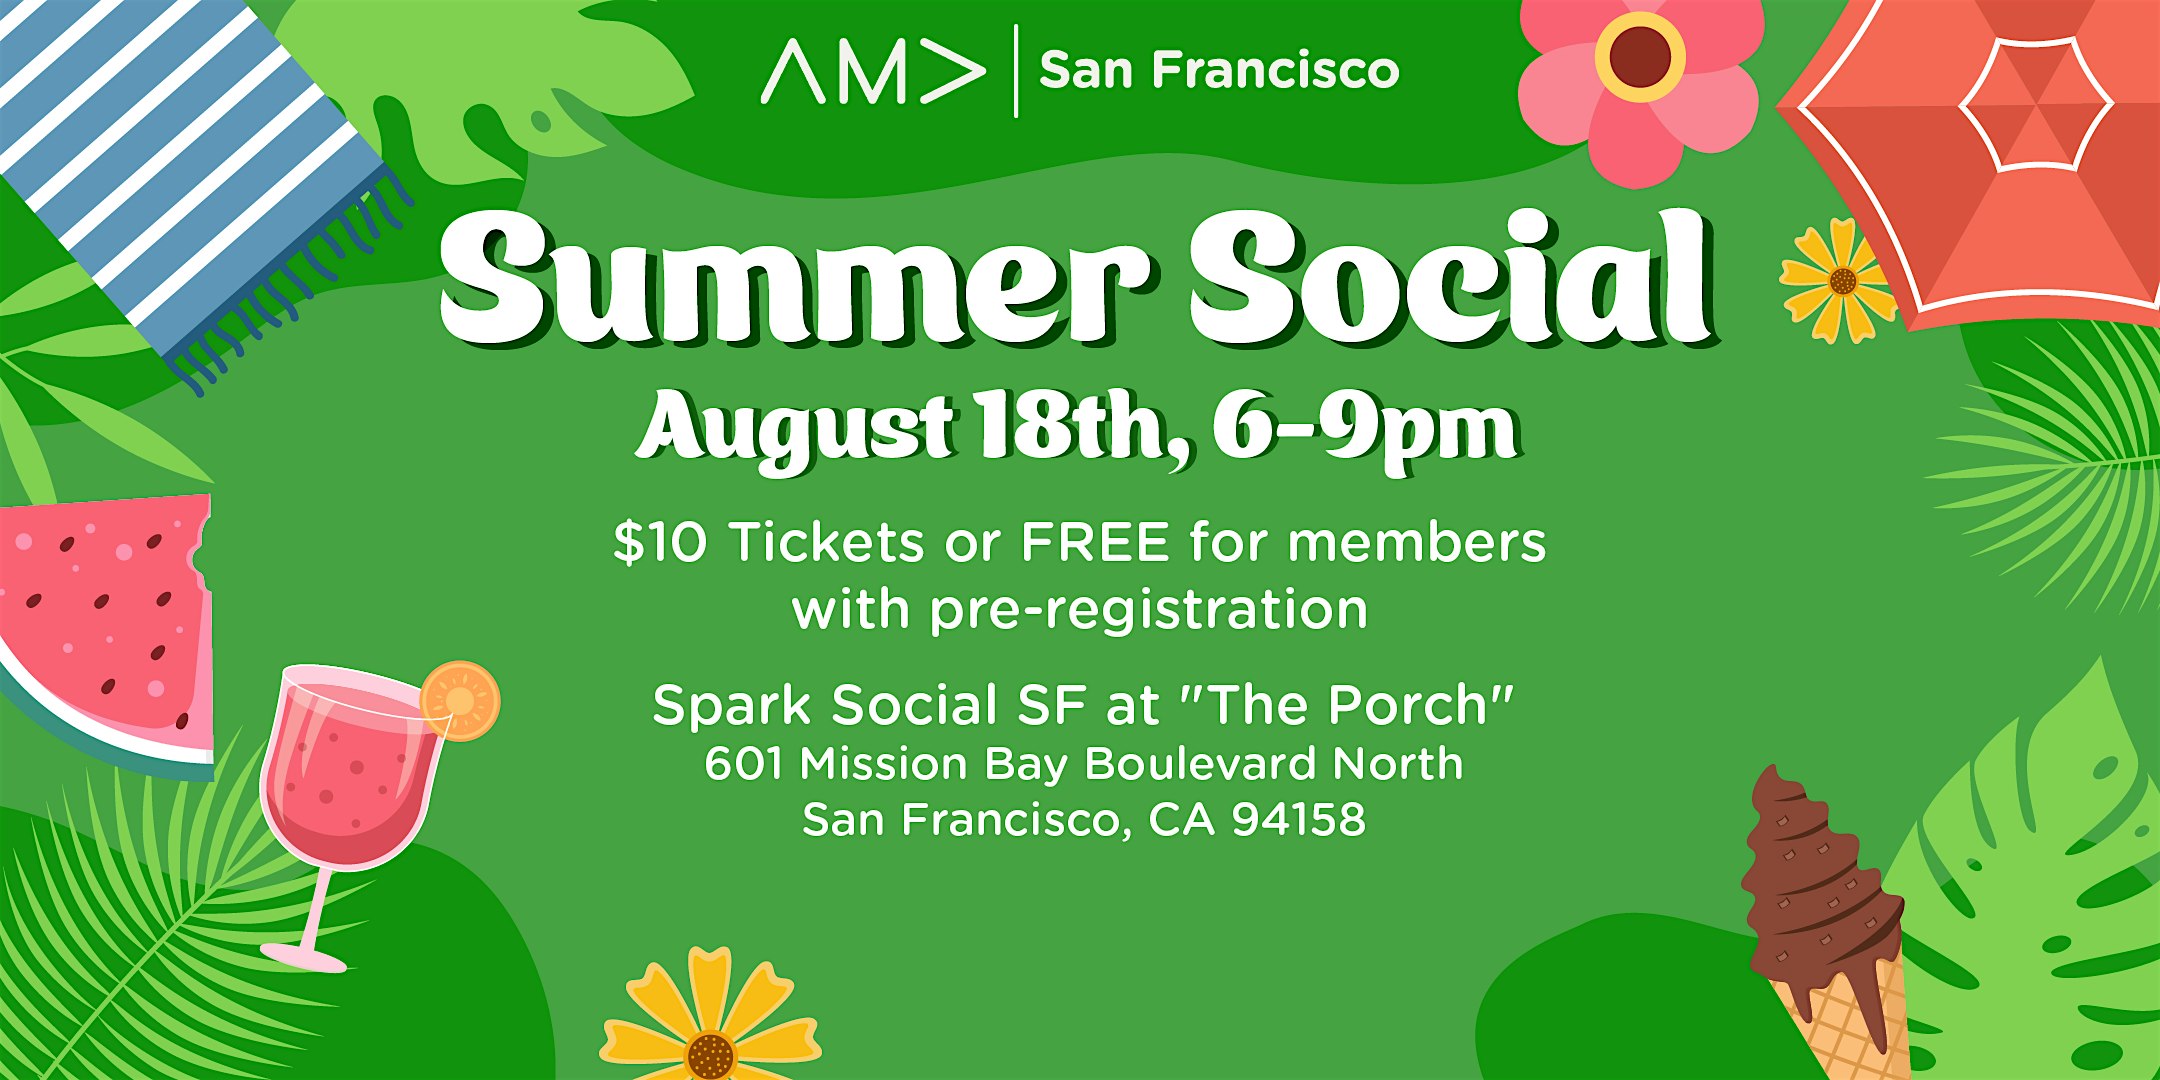 AMA SF Summer Social